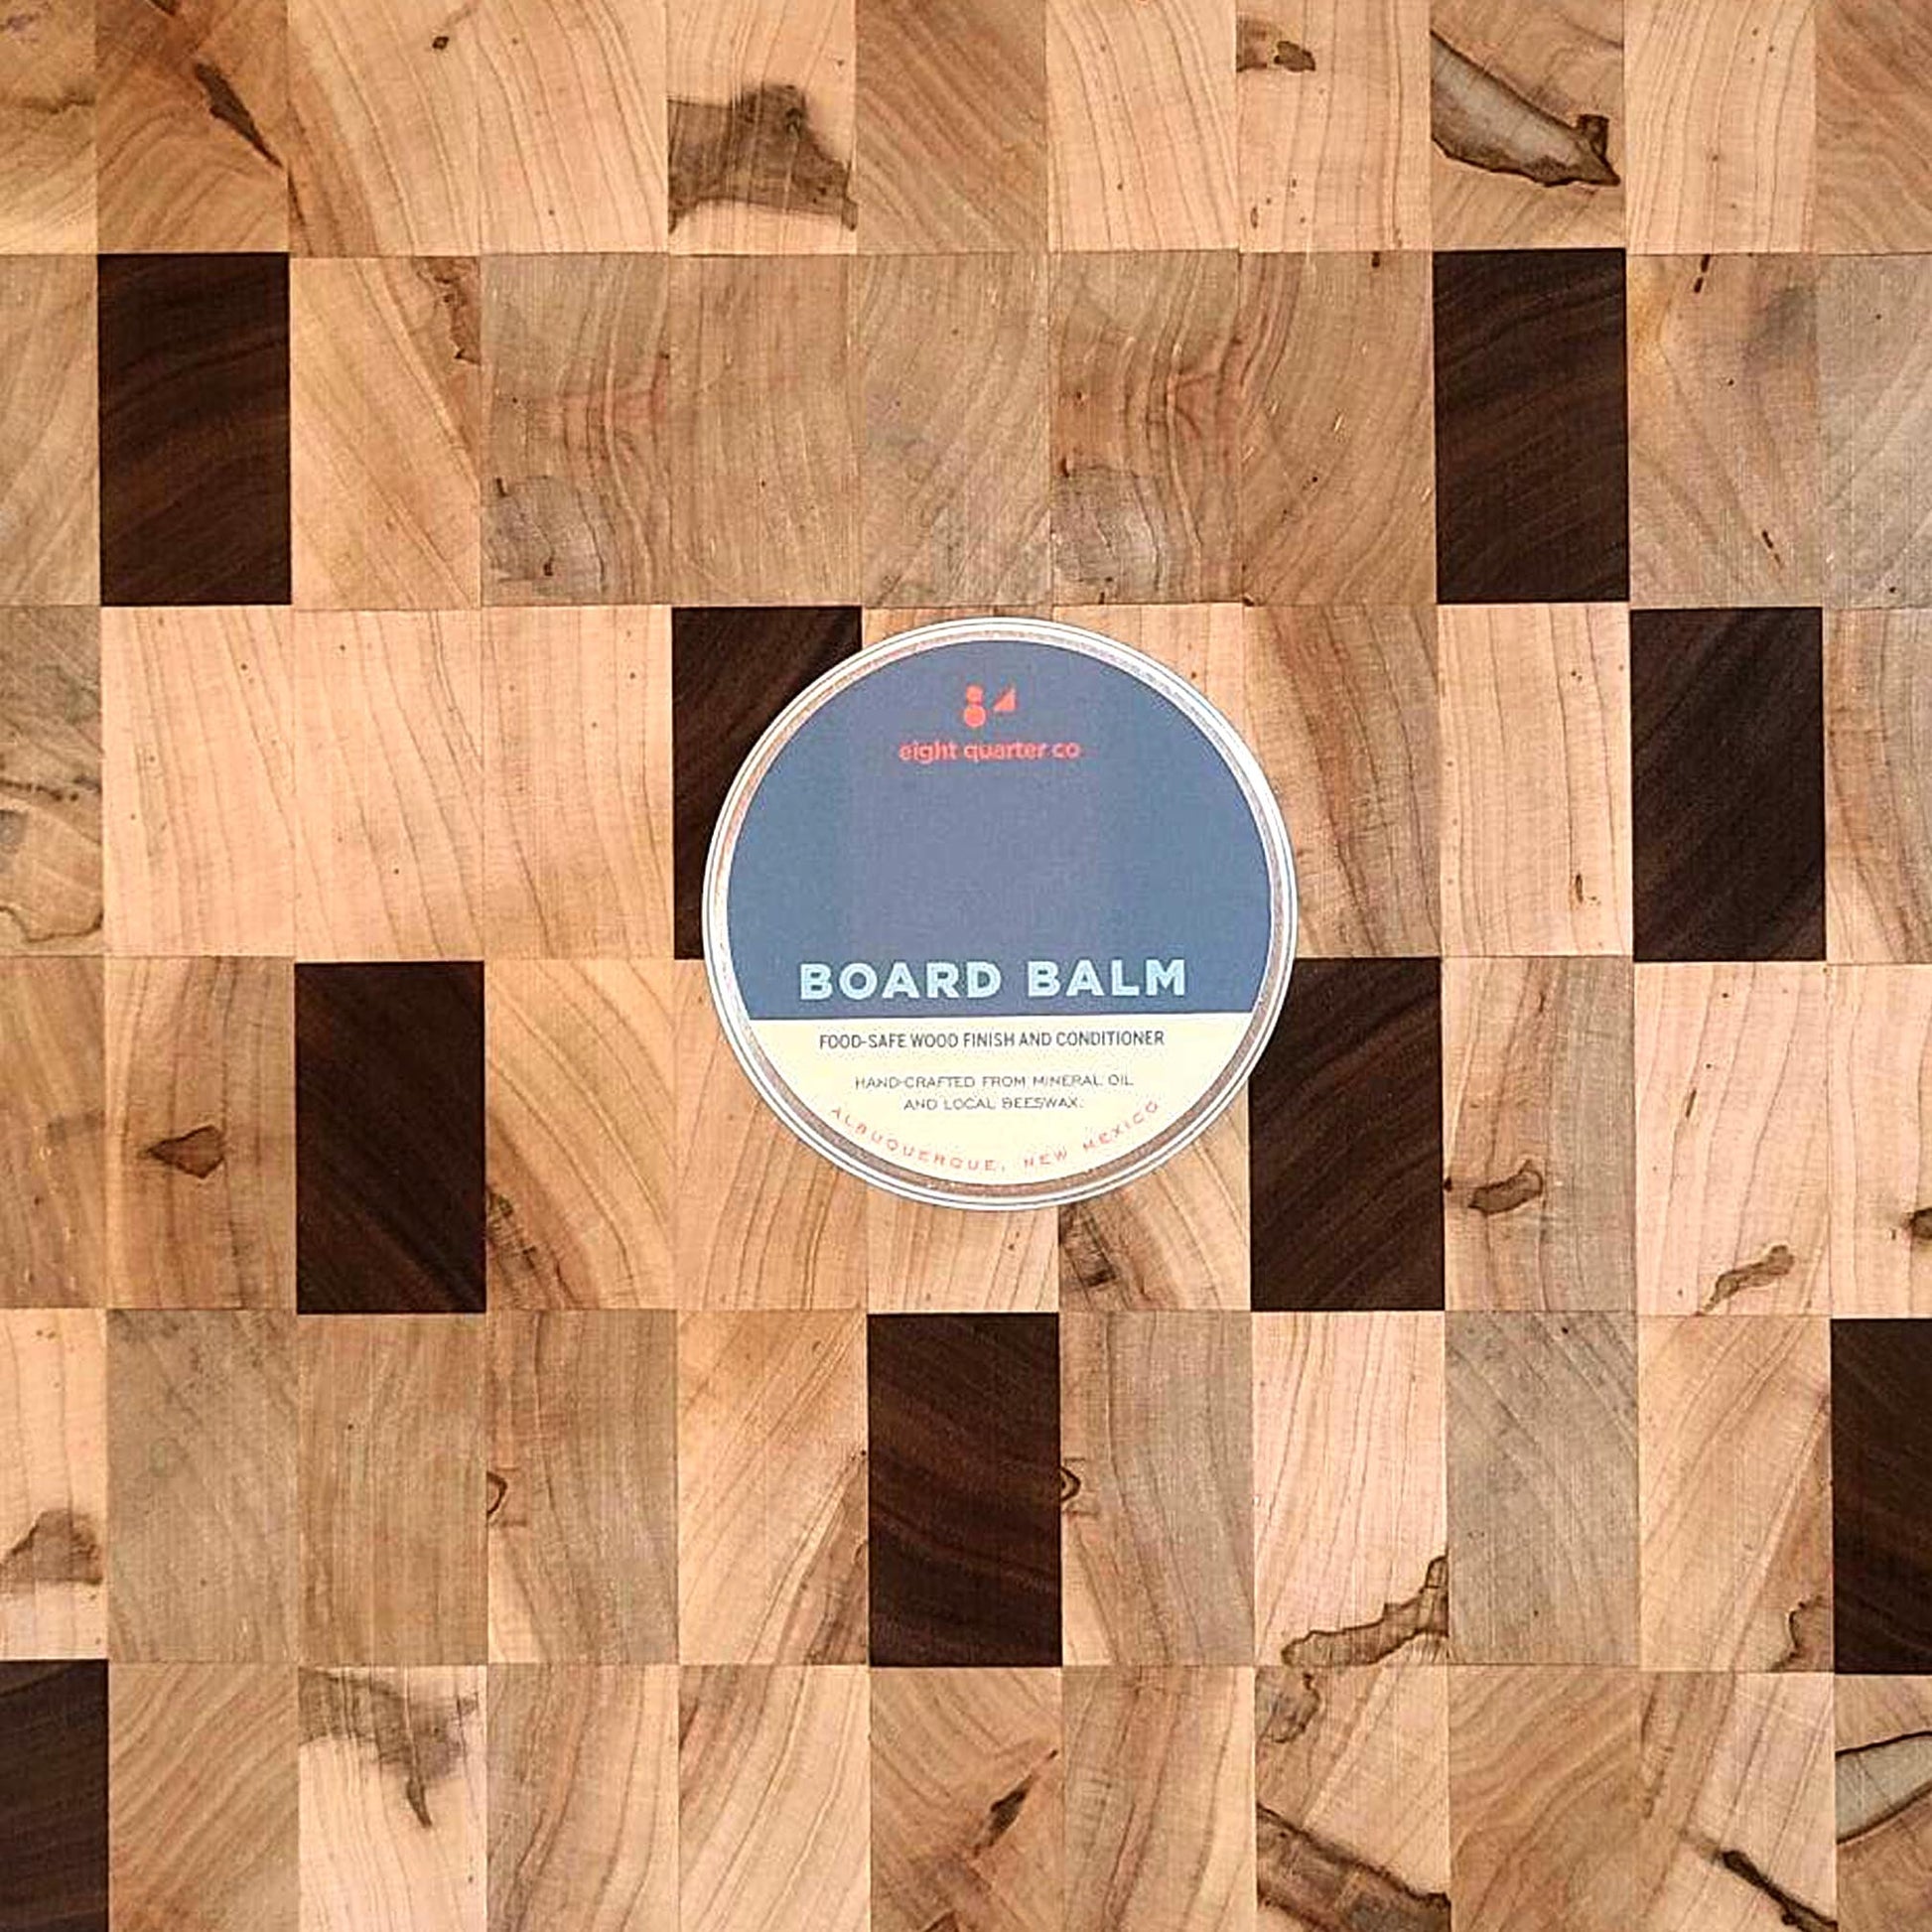 Wood Wax - Board Conditioner — Timber + Skye